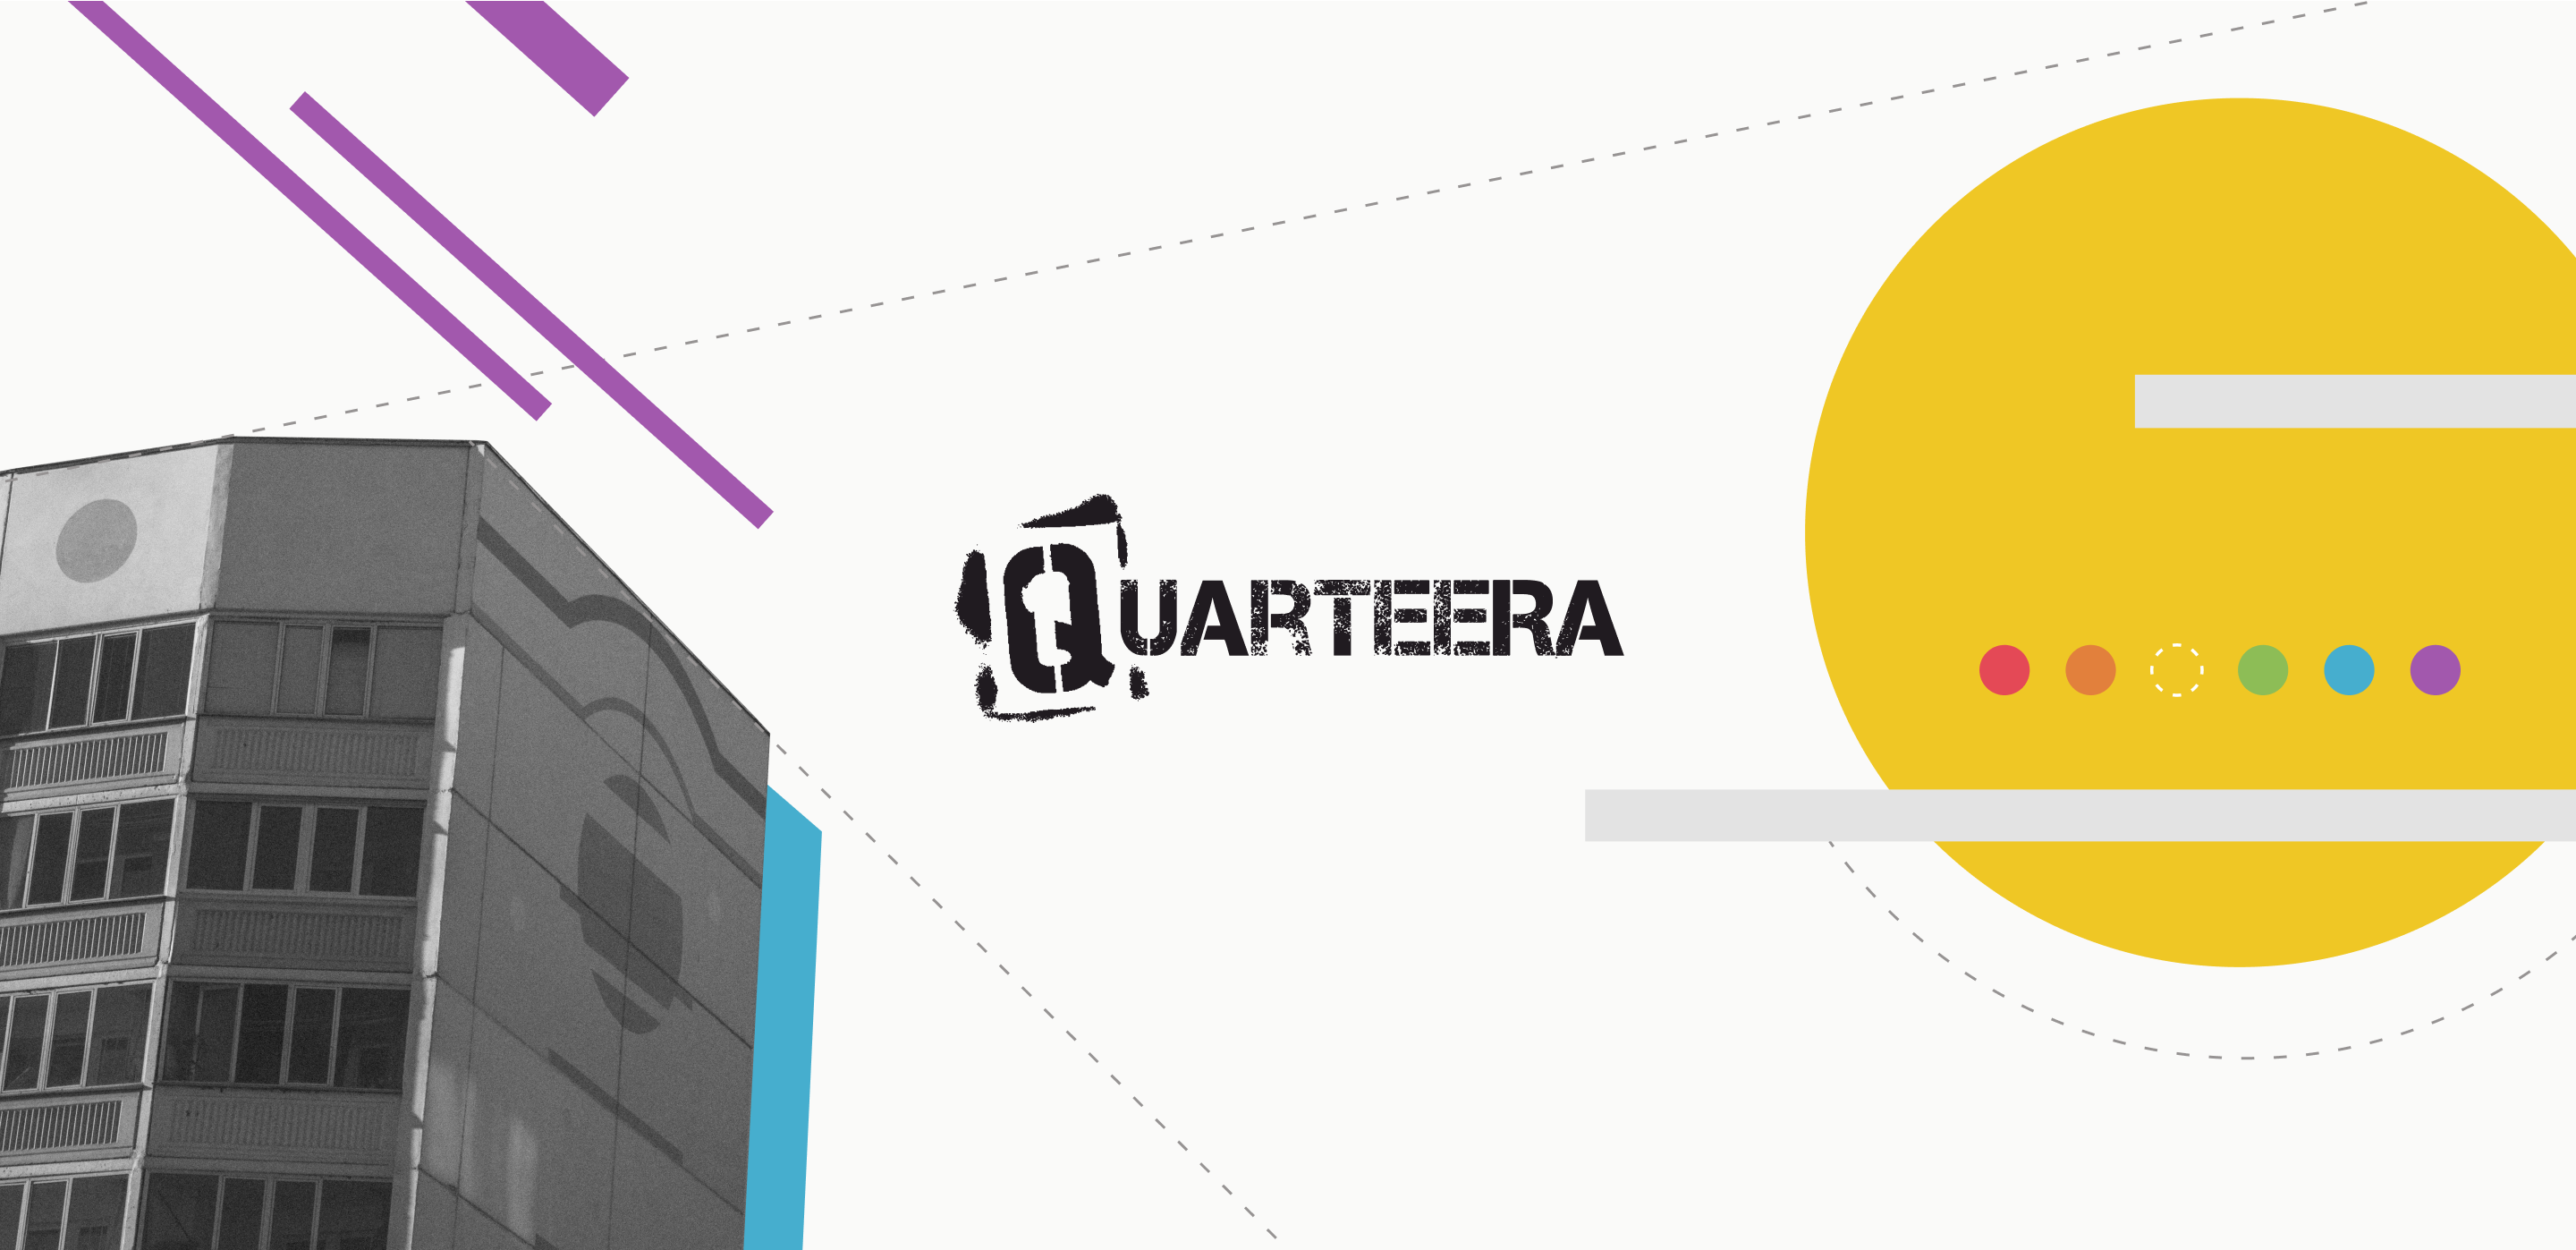 Quarteera logo in bold letters